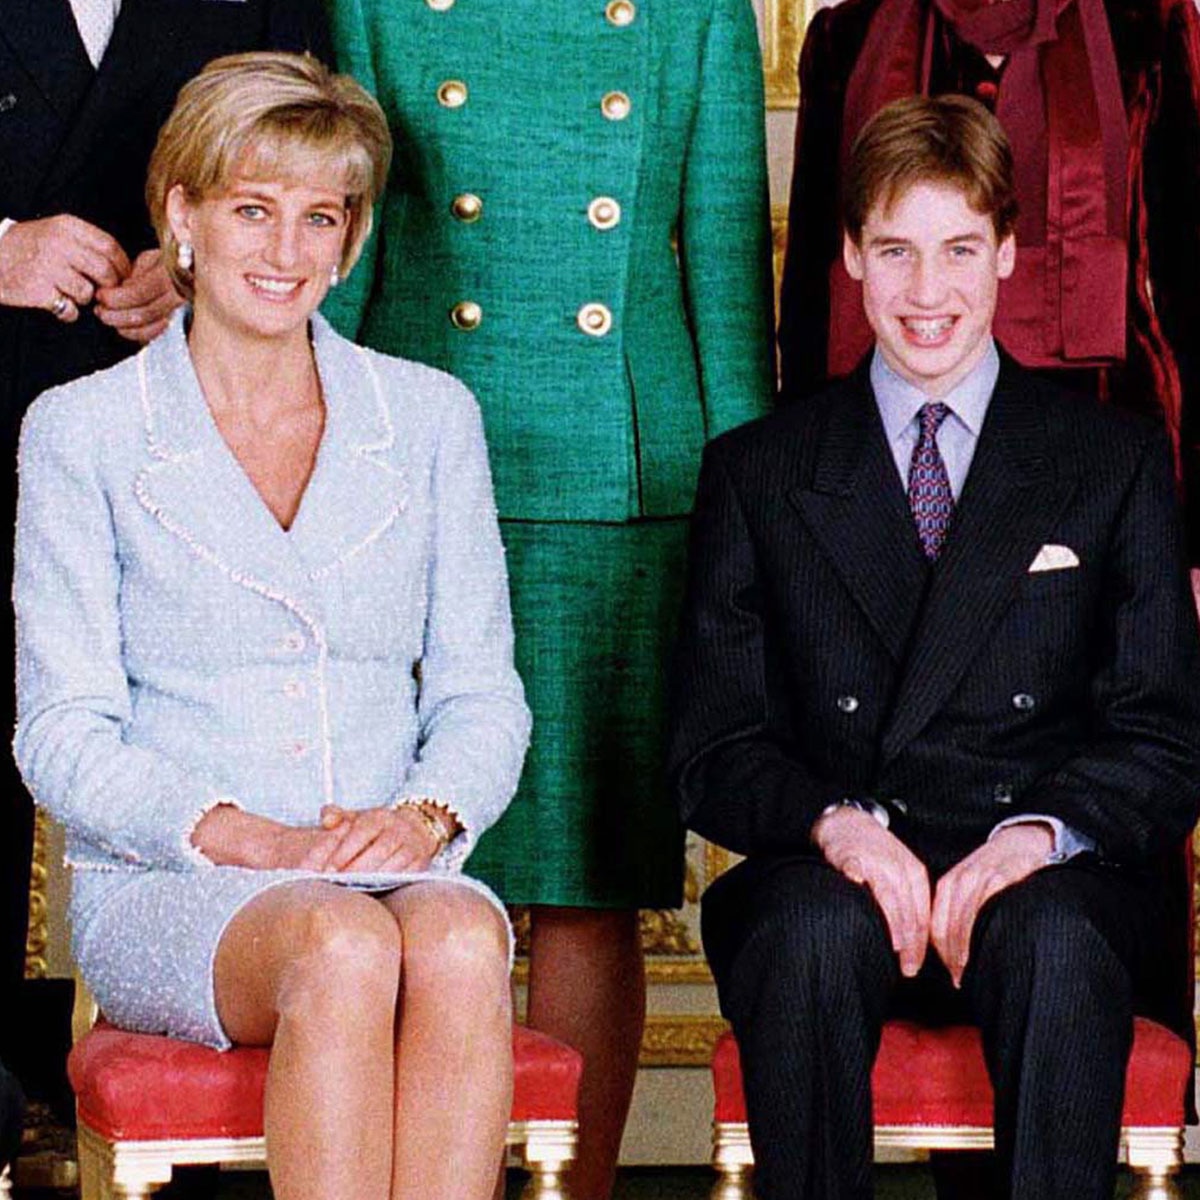 Prince William and his mom Princess Diana